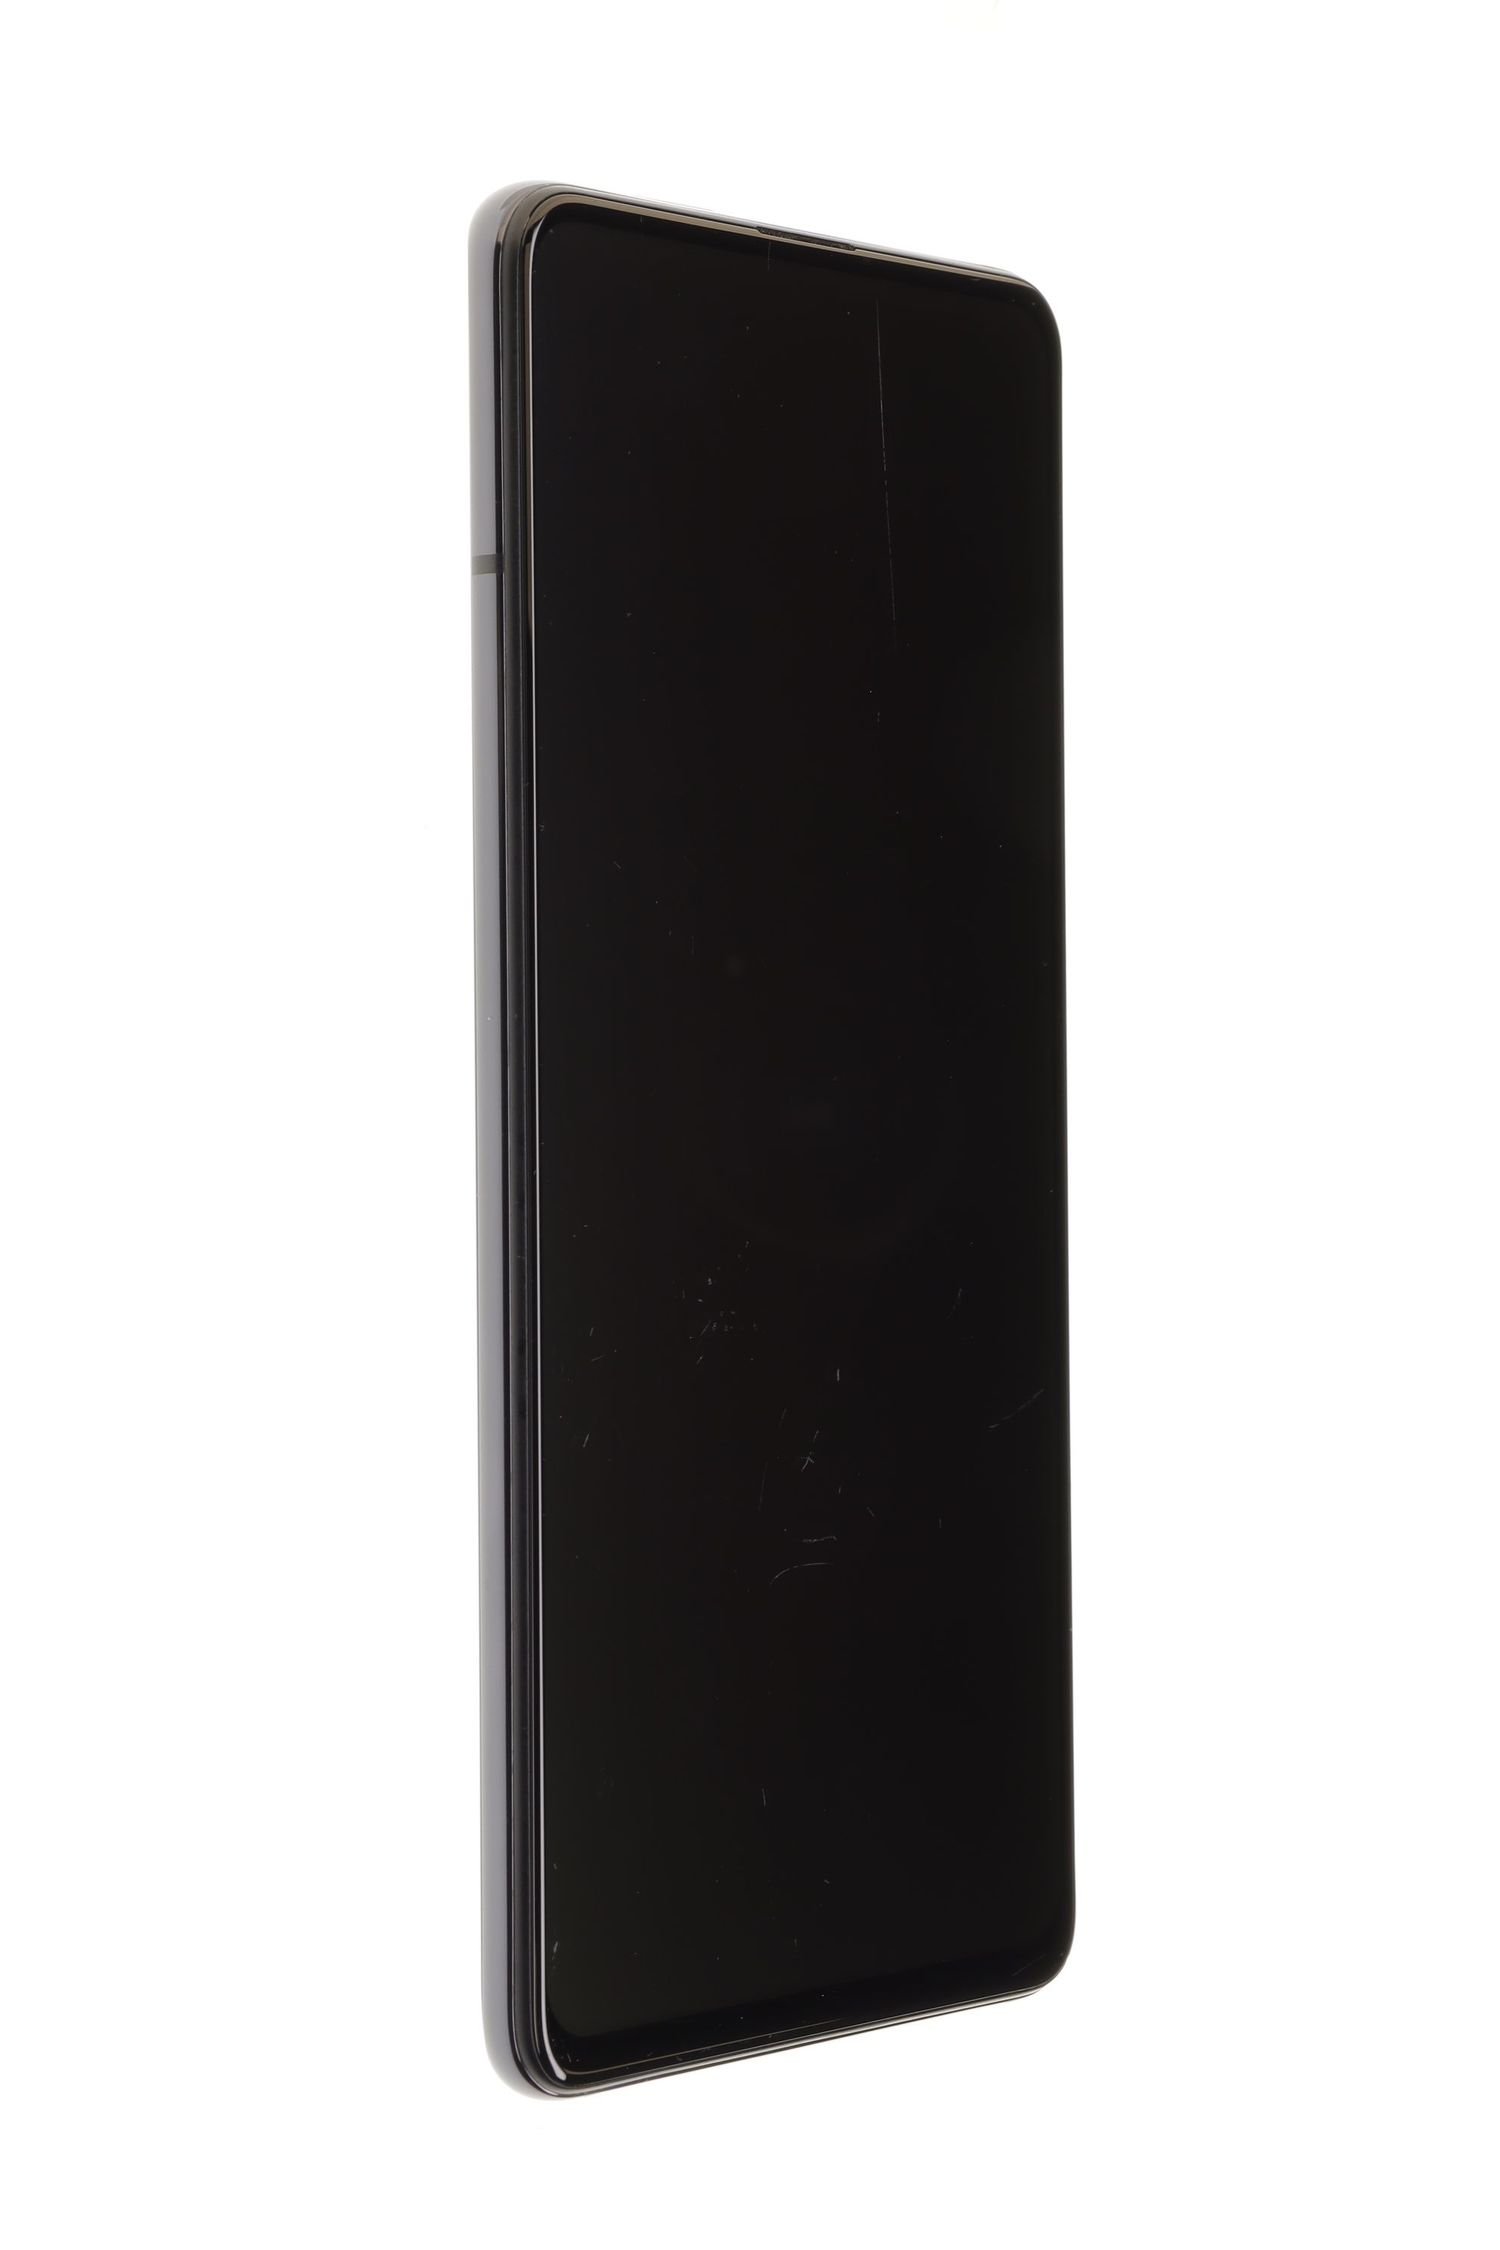 Mobiltelefon Xiaomi Mi 9T Pro, Carbon Black, 64 GB, Bun